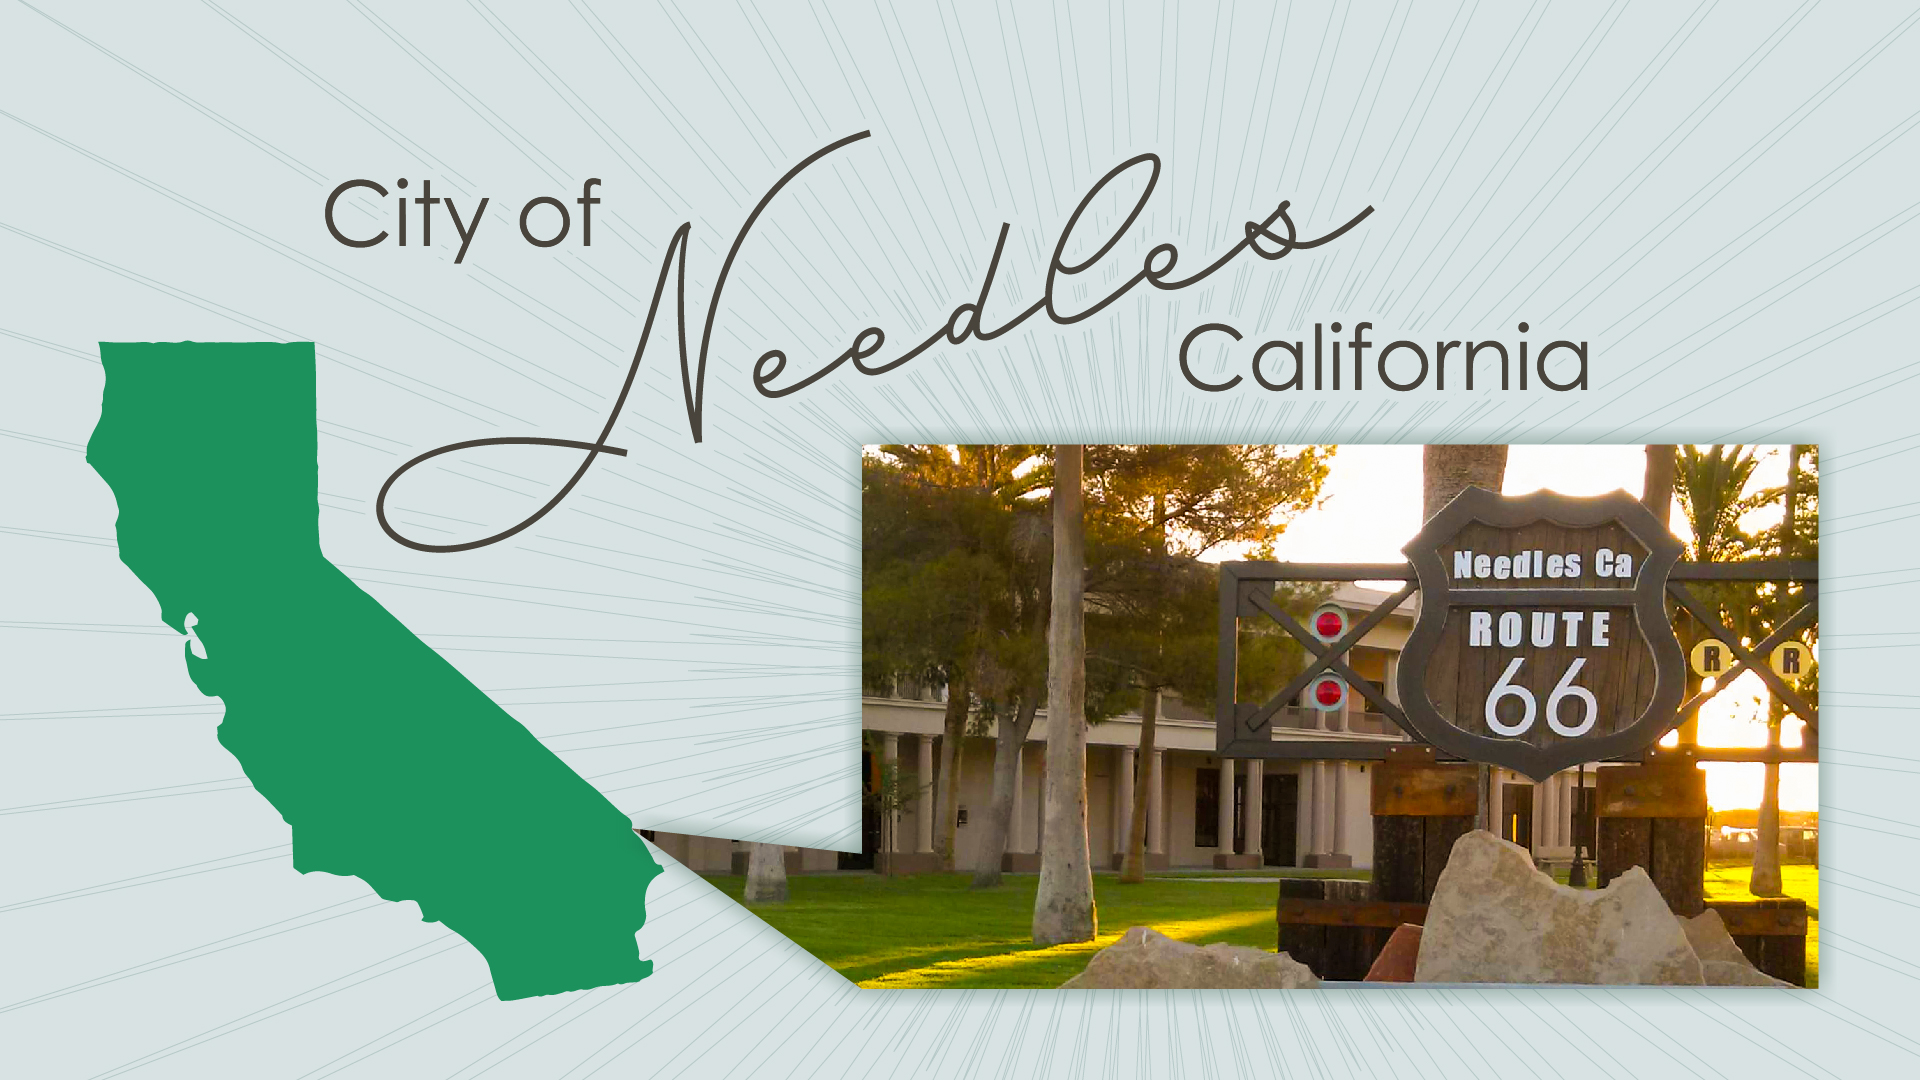 City of Needles California